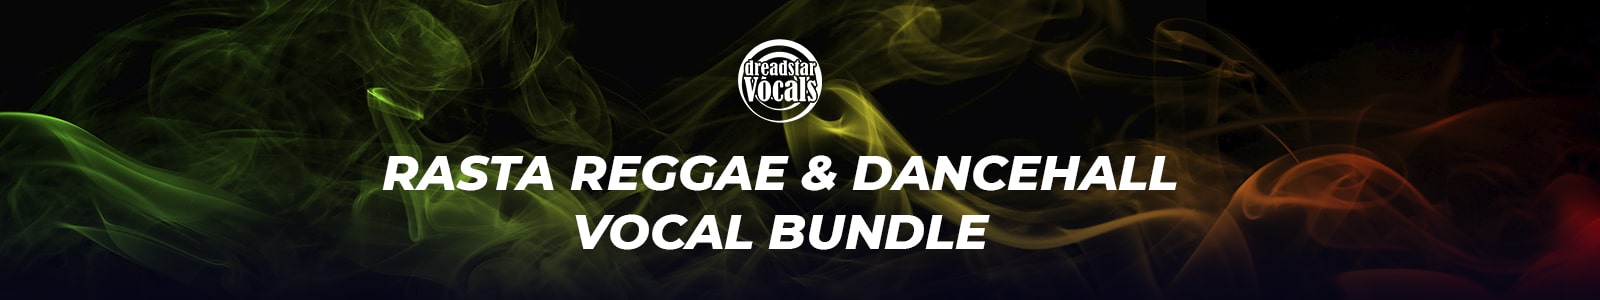 rasta reggae & dancehall vocal bundle